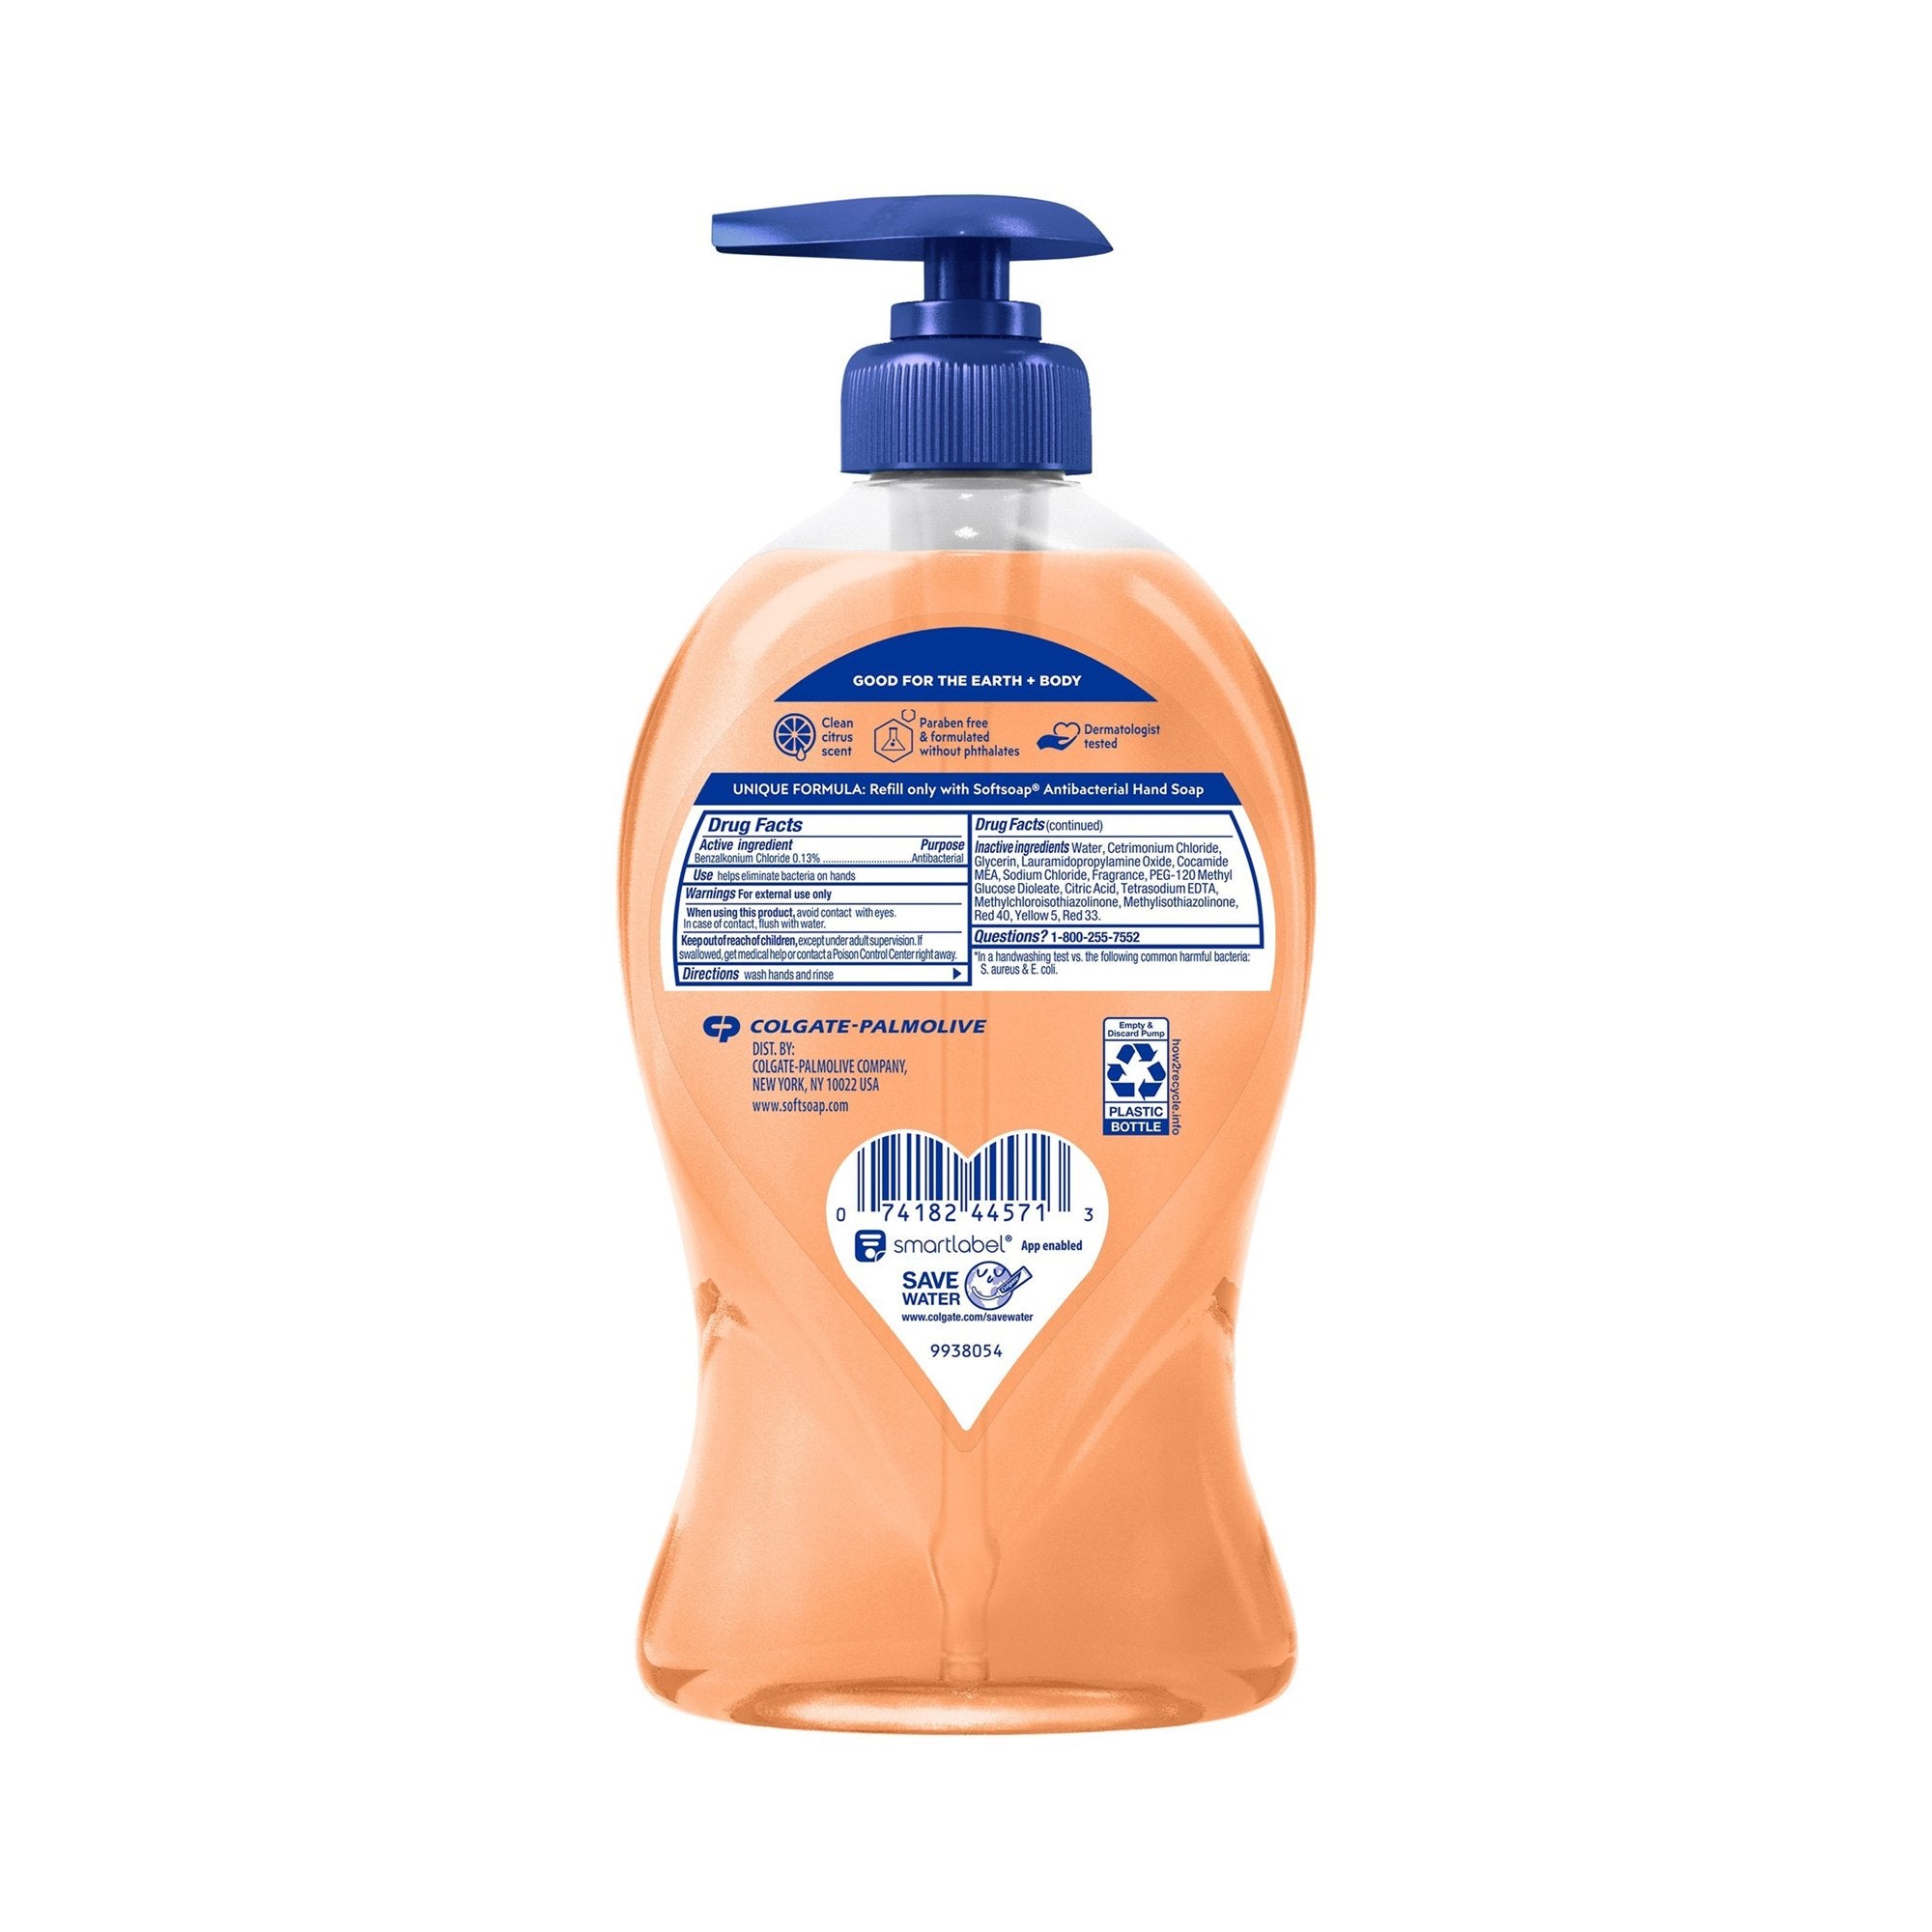 Antibacterial Soap Softsoap Liquid 11.25 oz. Pump Bottle Clean Scent